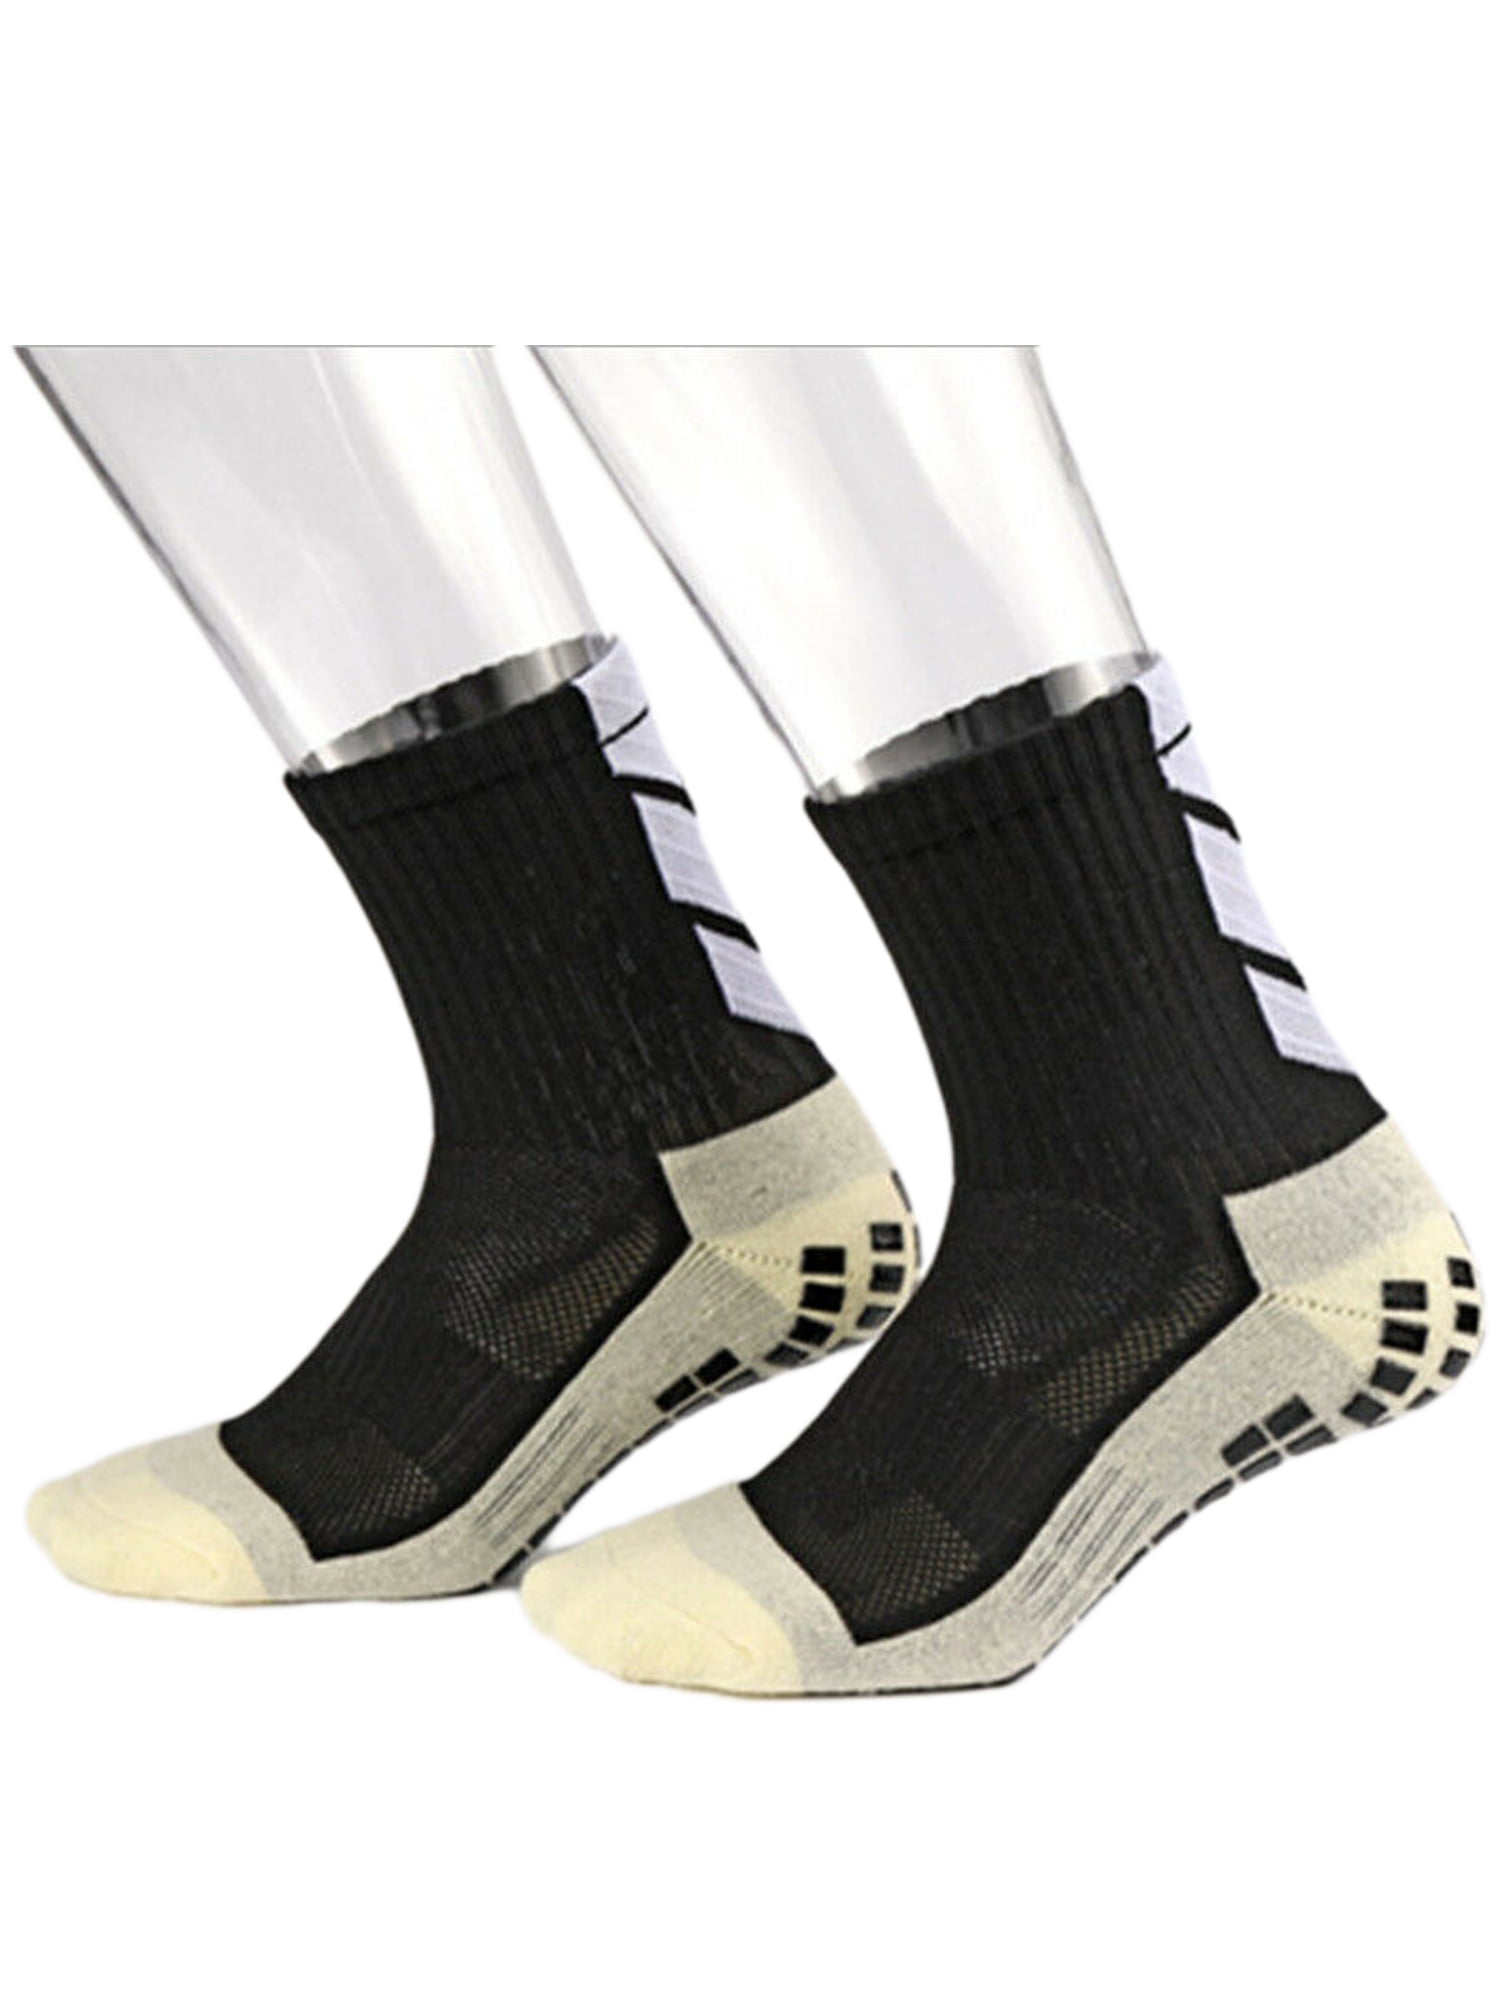 Non Slip Mens Football Long Socks Thick Athletic Soccer Stocking Anti-Slip  2pcs 